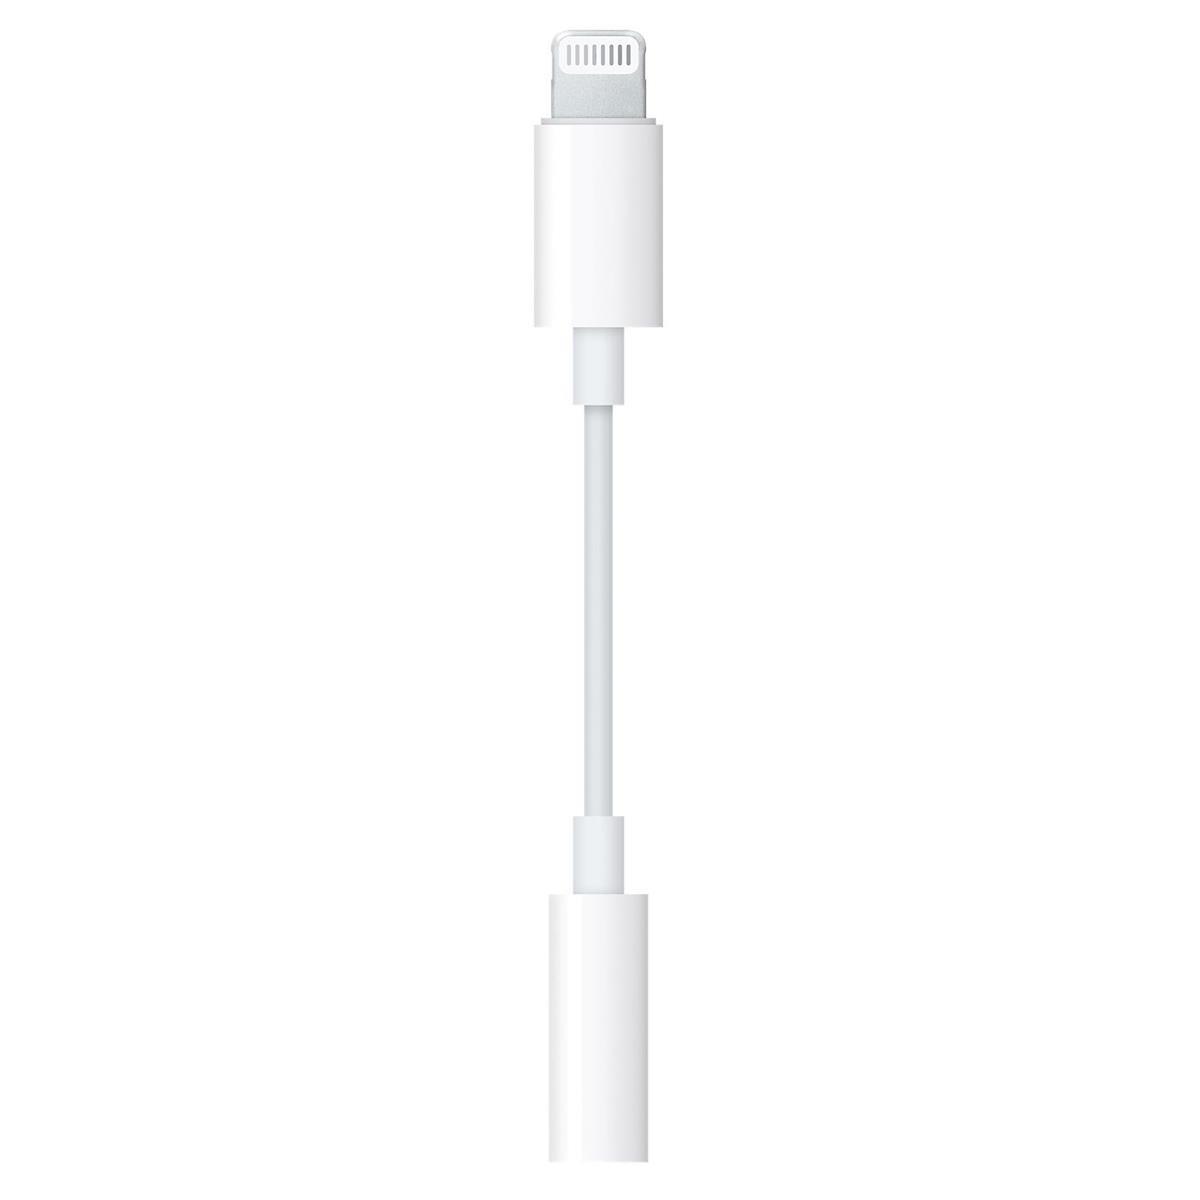 Apple 2 Pack Lightning to 3.5mm Headphone Jack Adapter